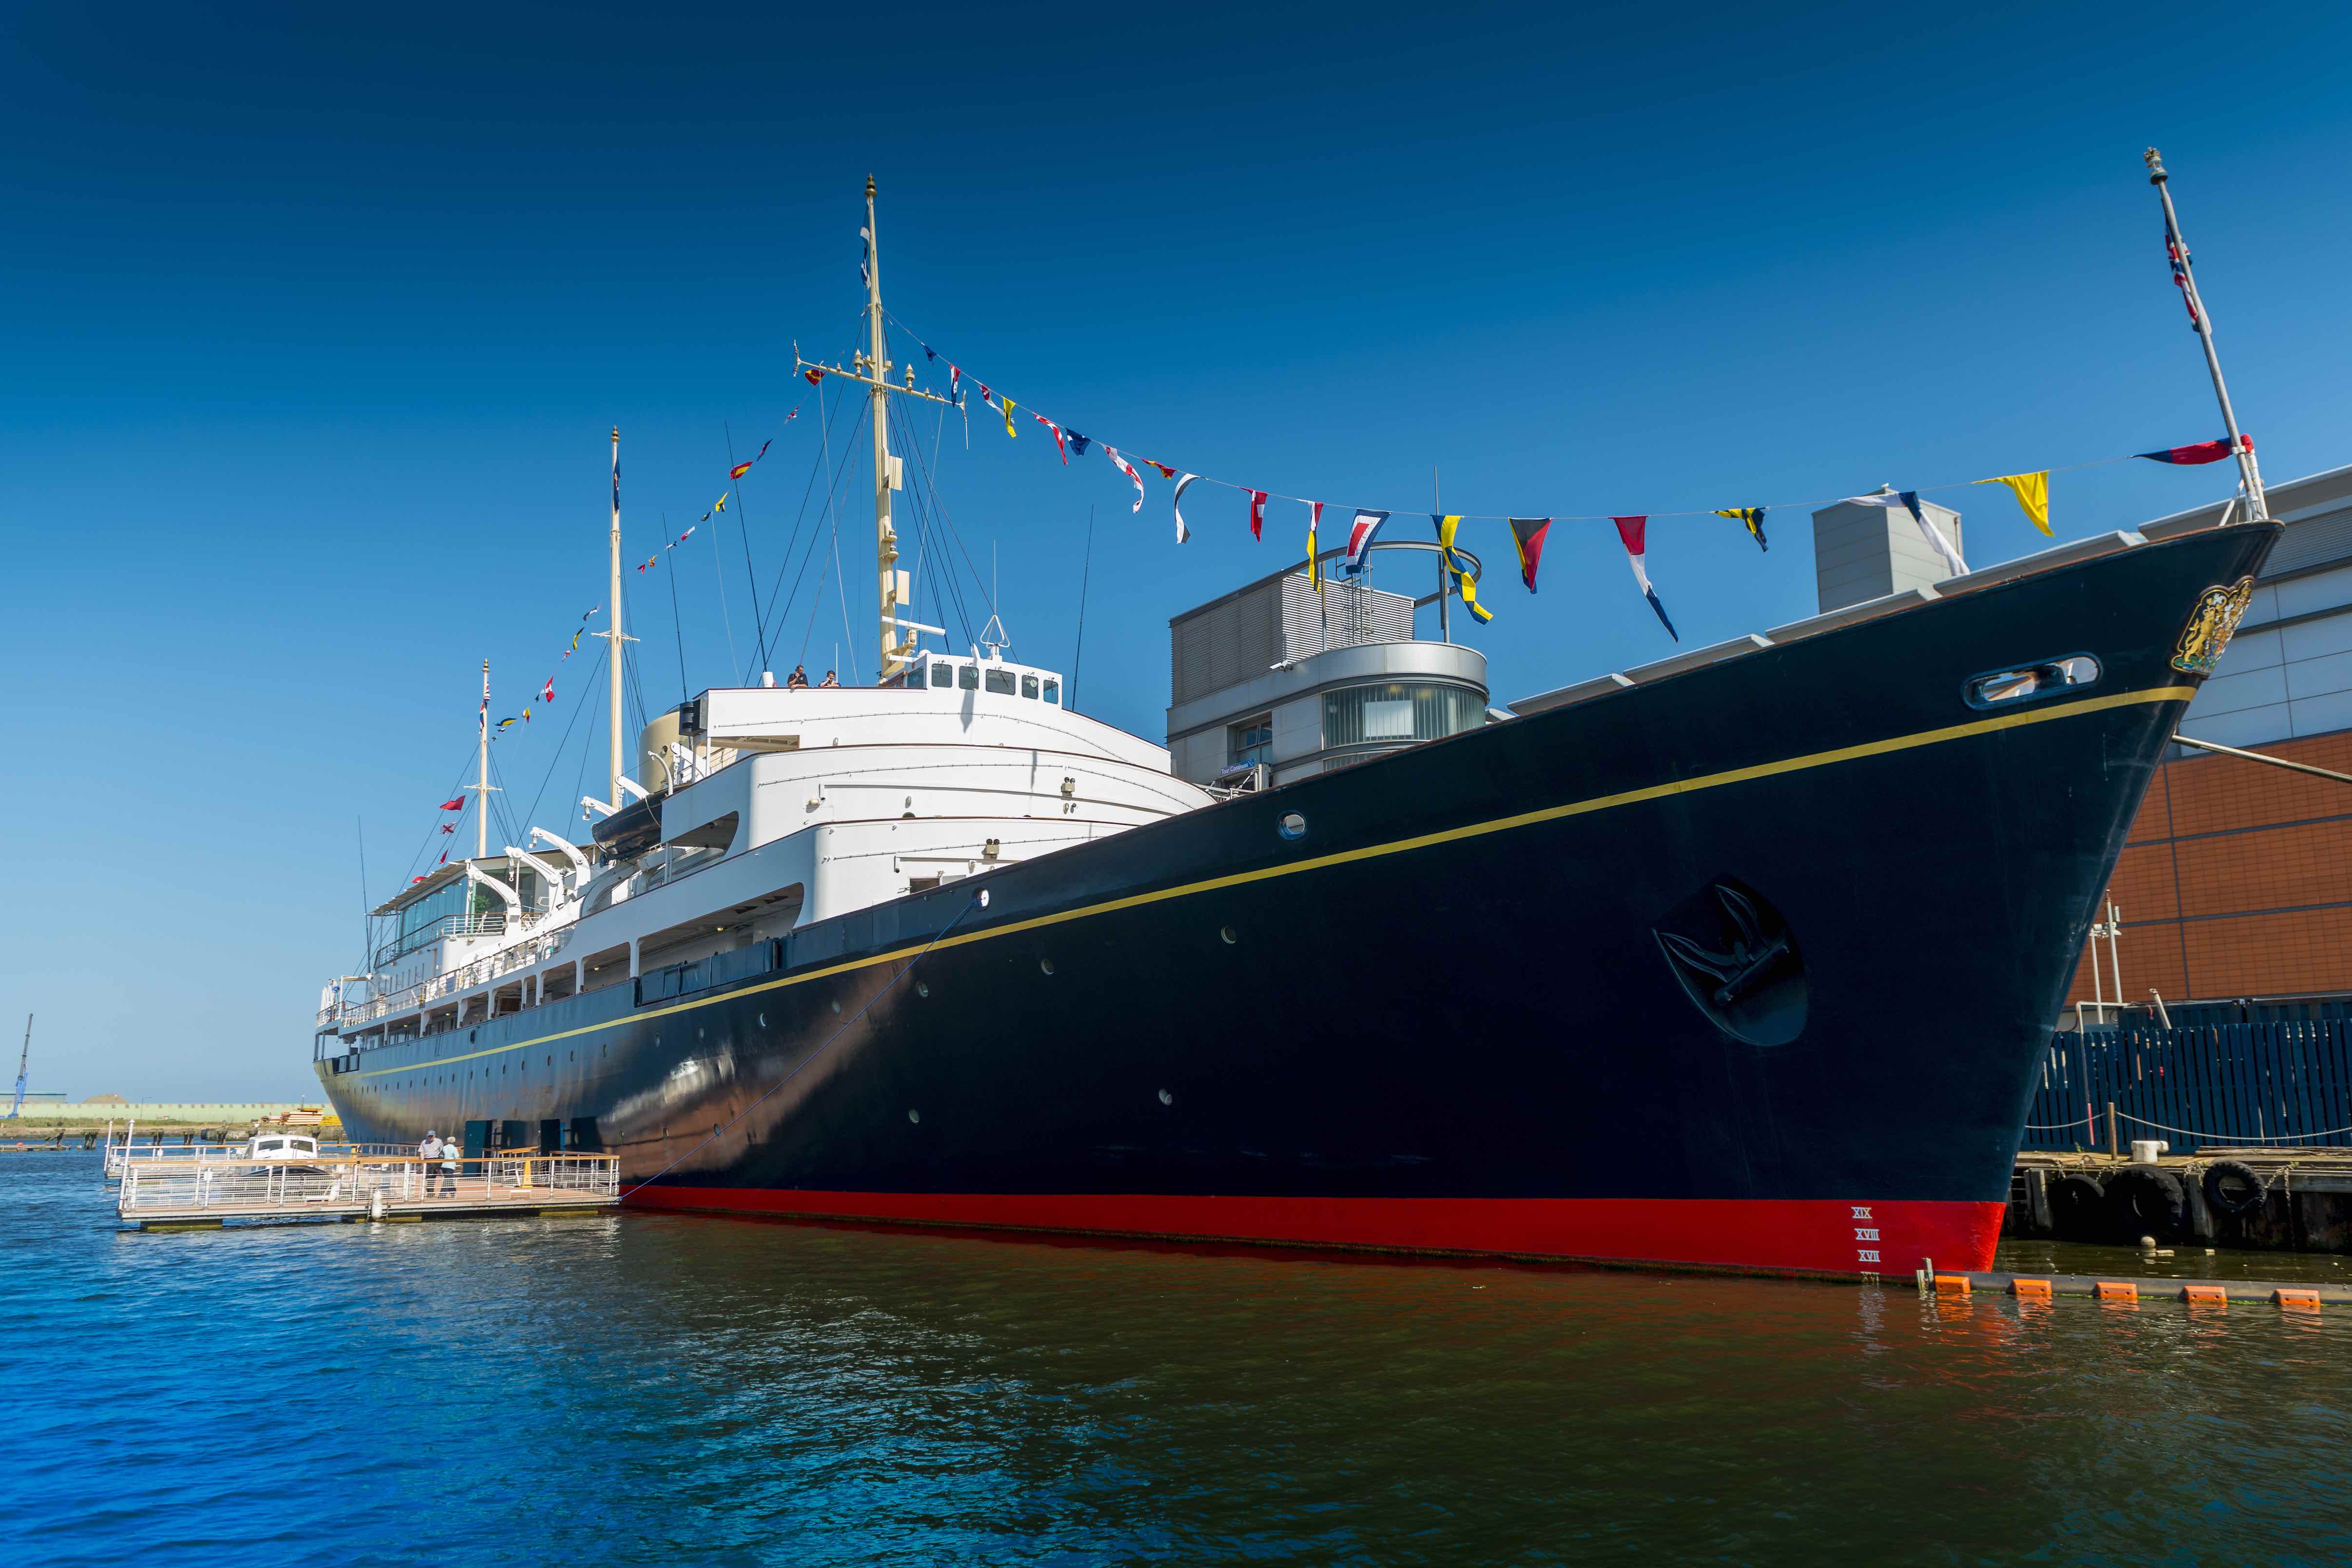 photos of royal yacht britannia